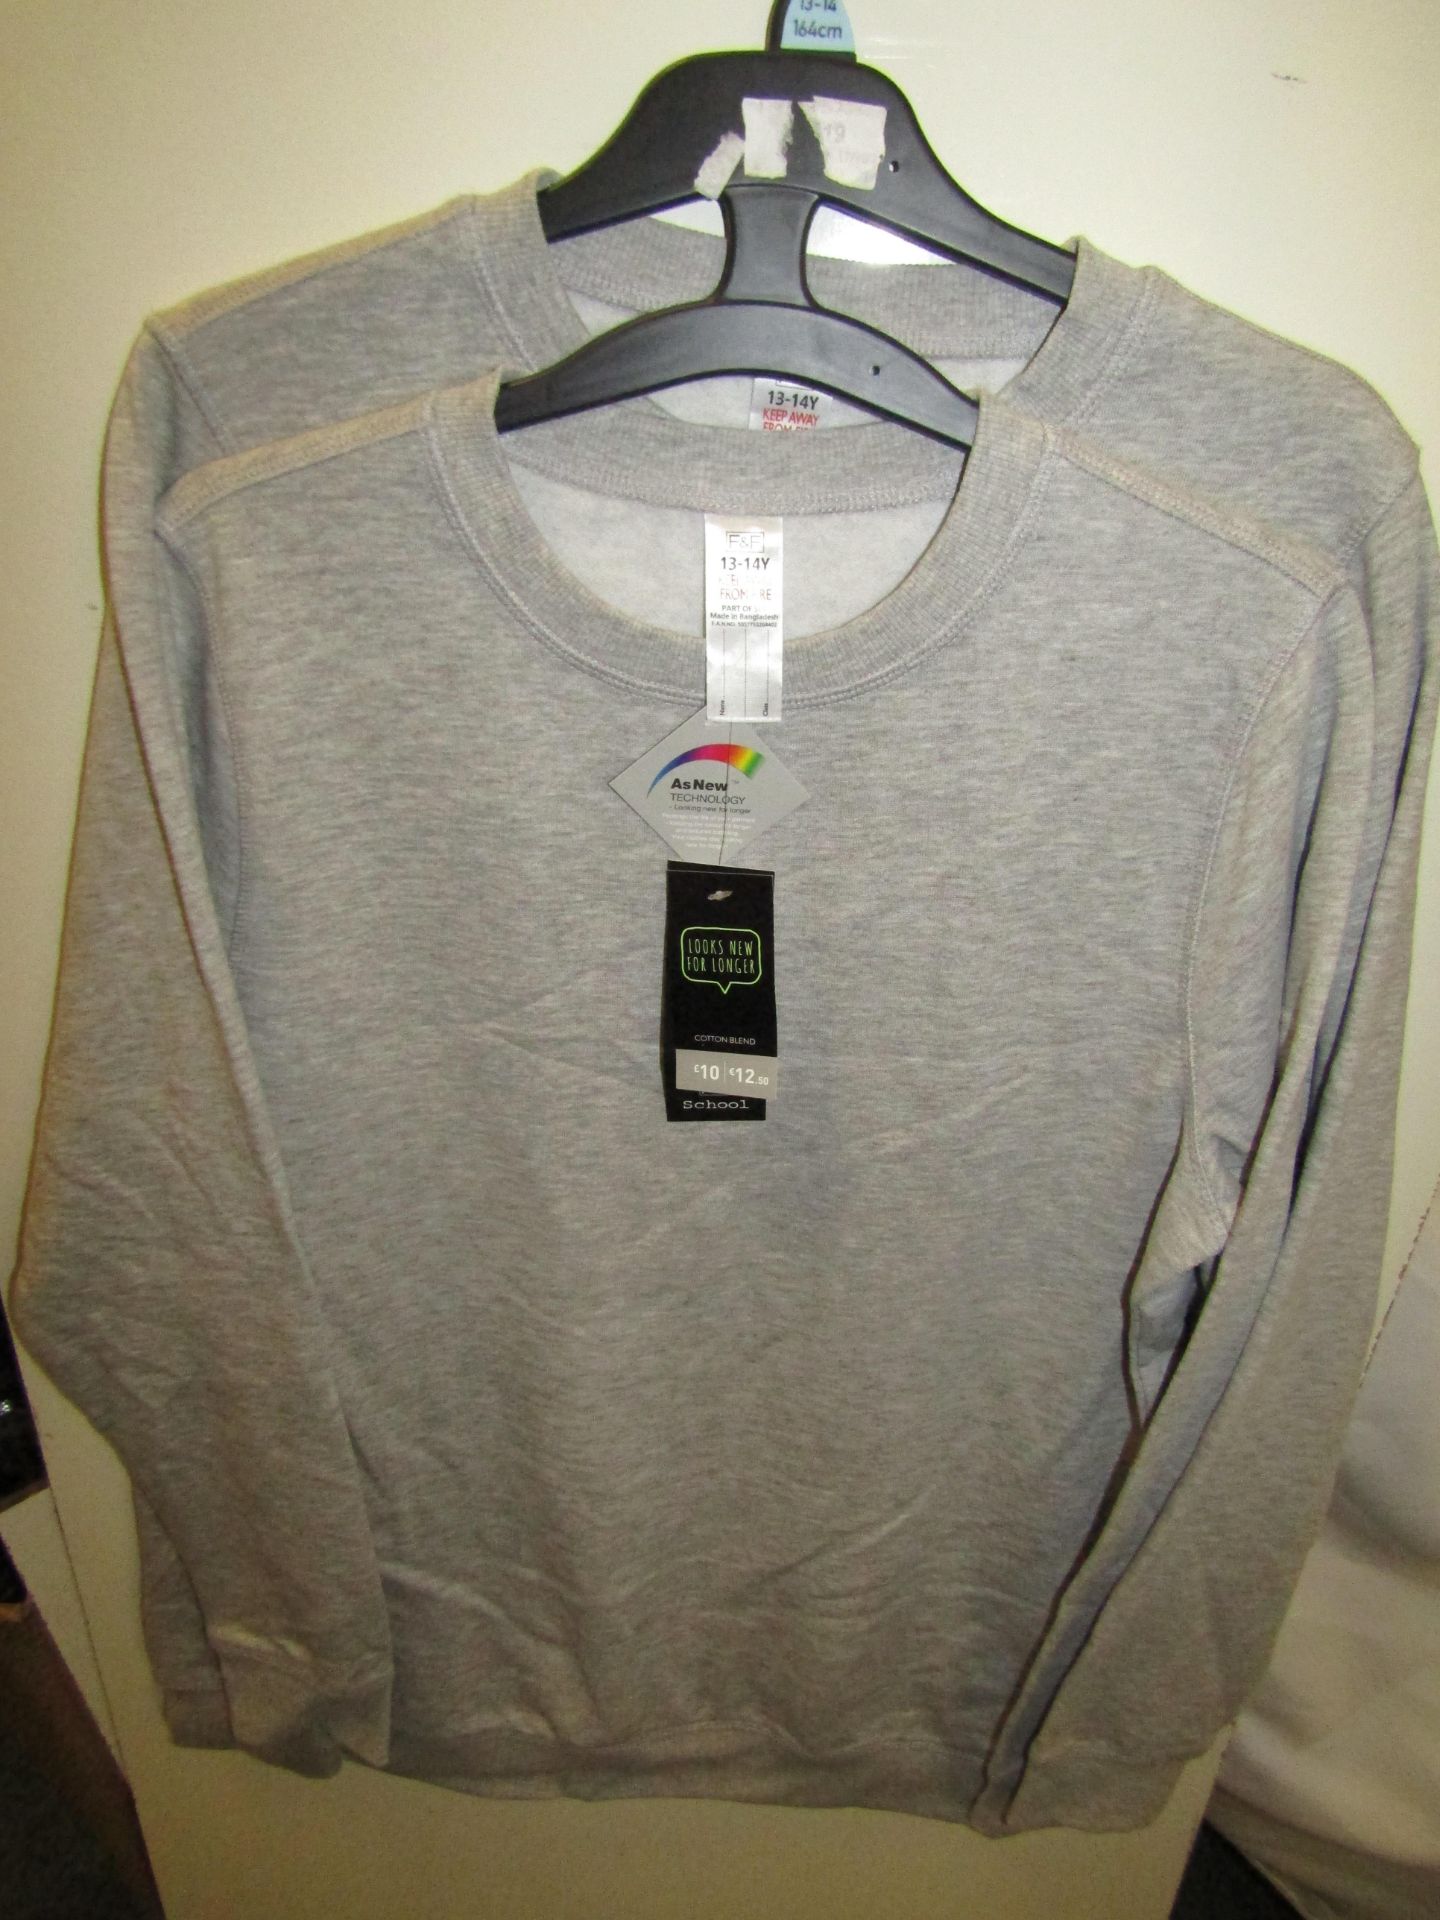 2 X Primark Sweatshirts Grey Aged 14-15 yrs New With Tags